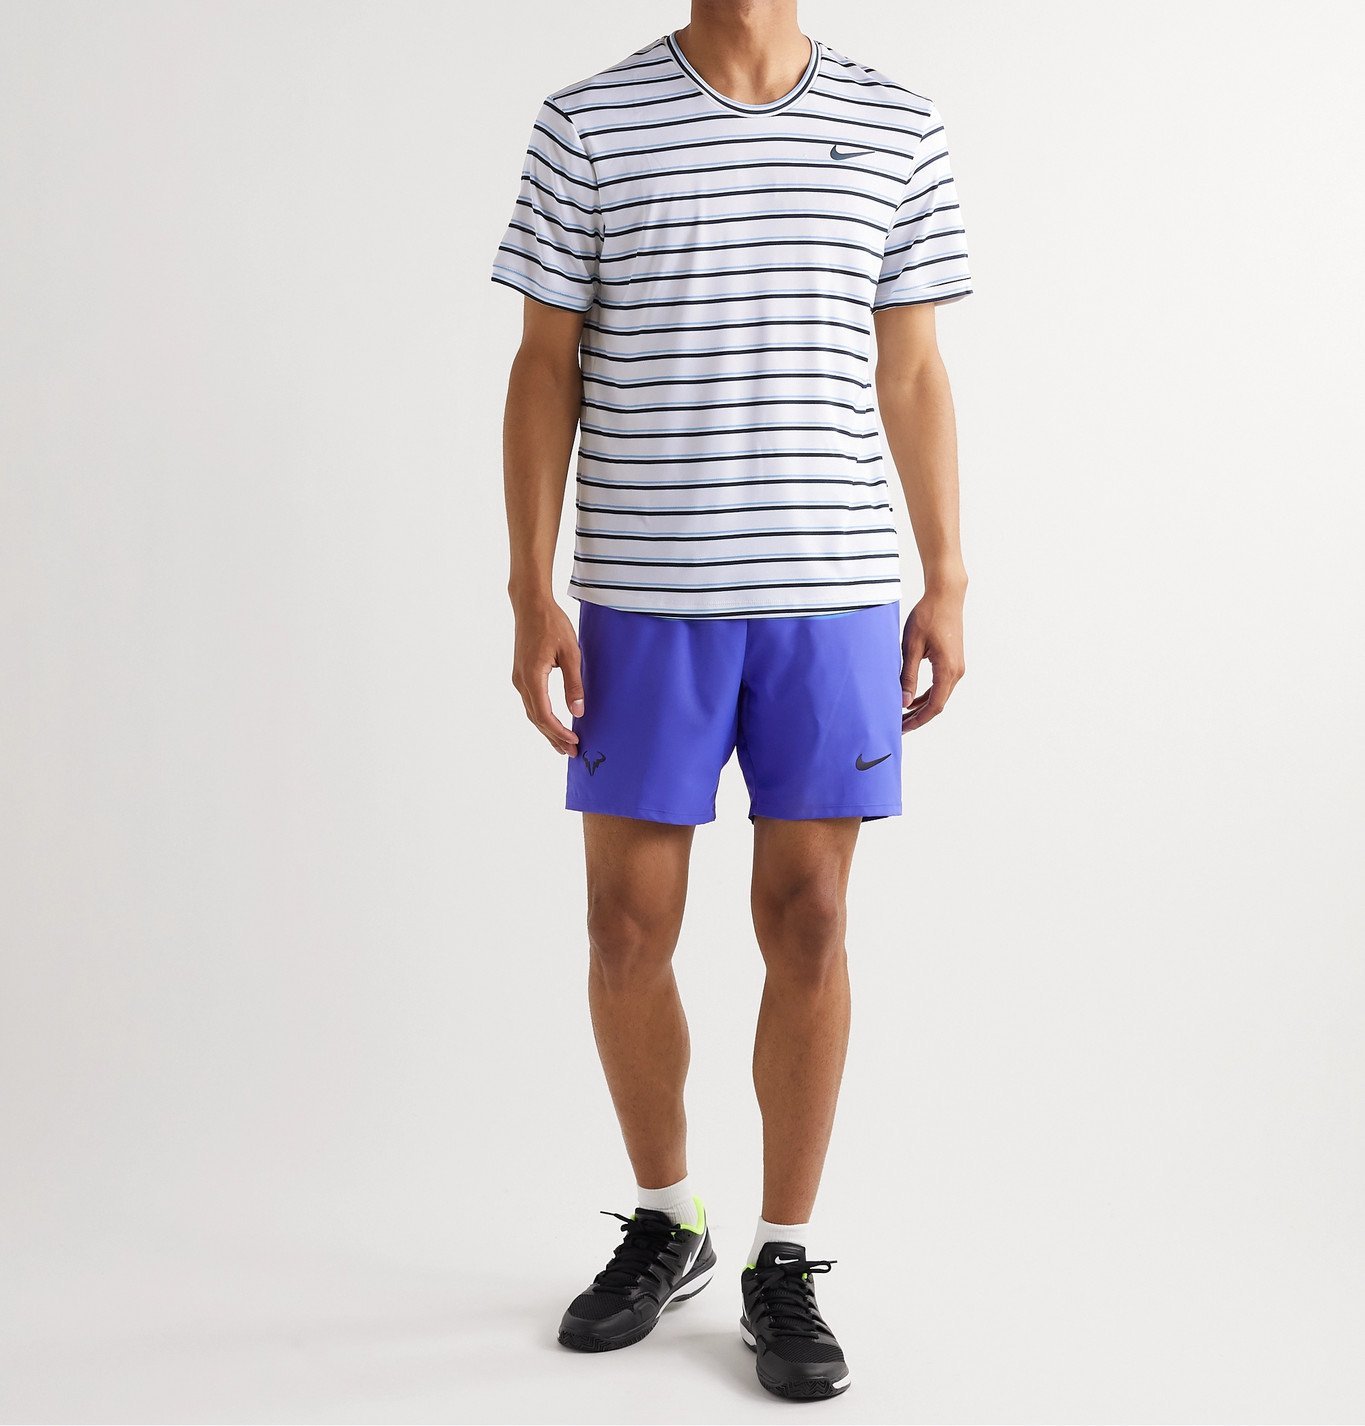 Nike Tennis - NikeCourt Striped Dri-FIT Tennis T-Shirt - White 